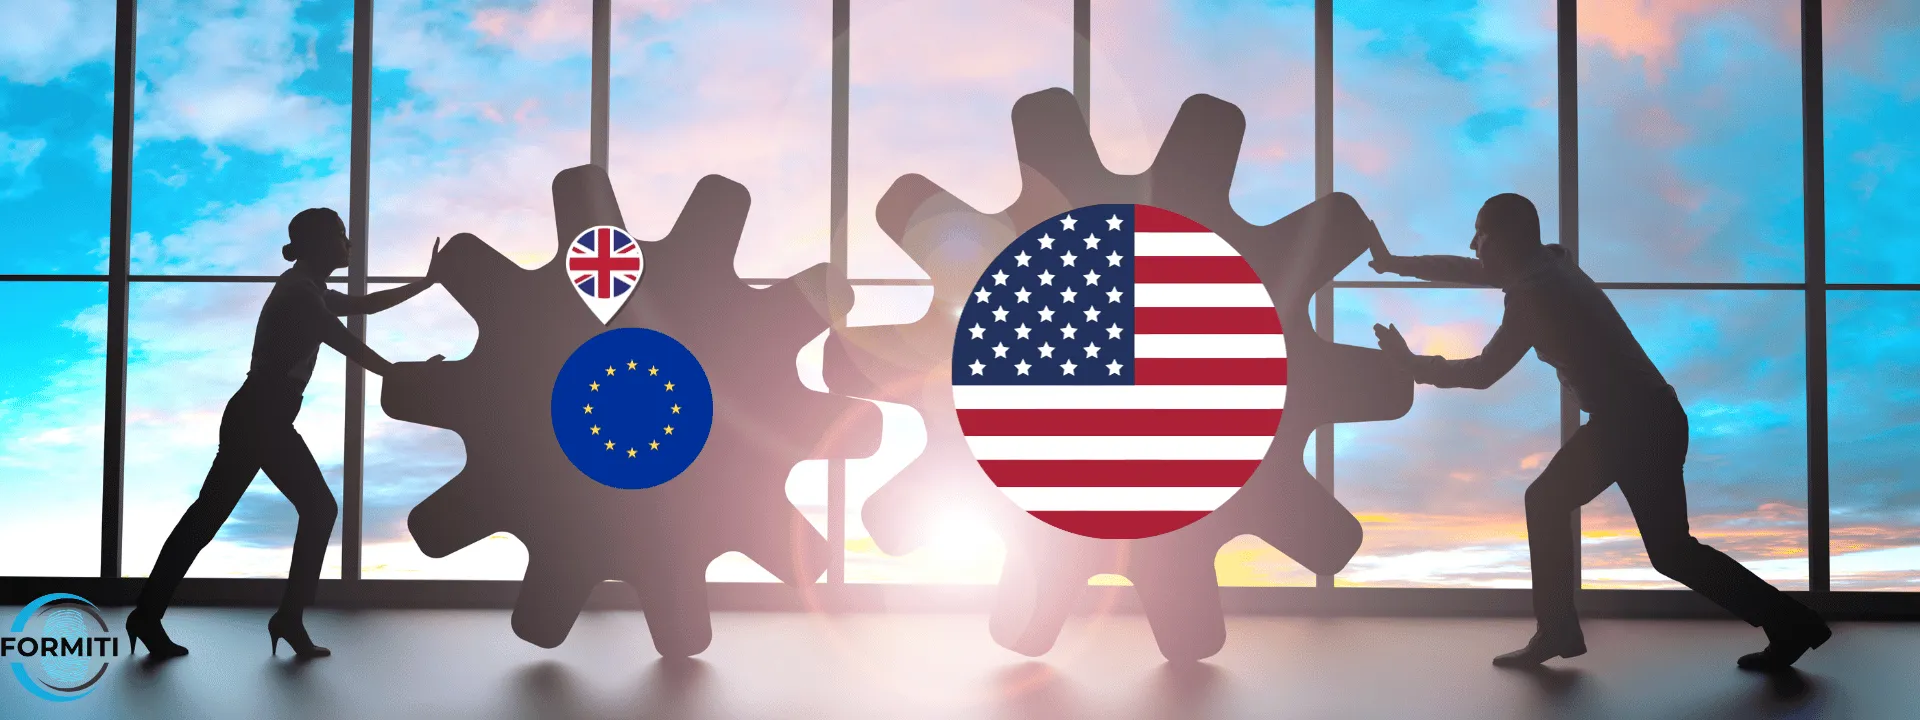 EU Representative for US Companies Article 27 Formiti